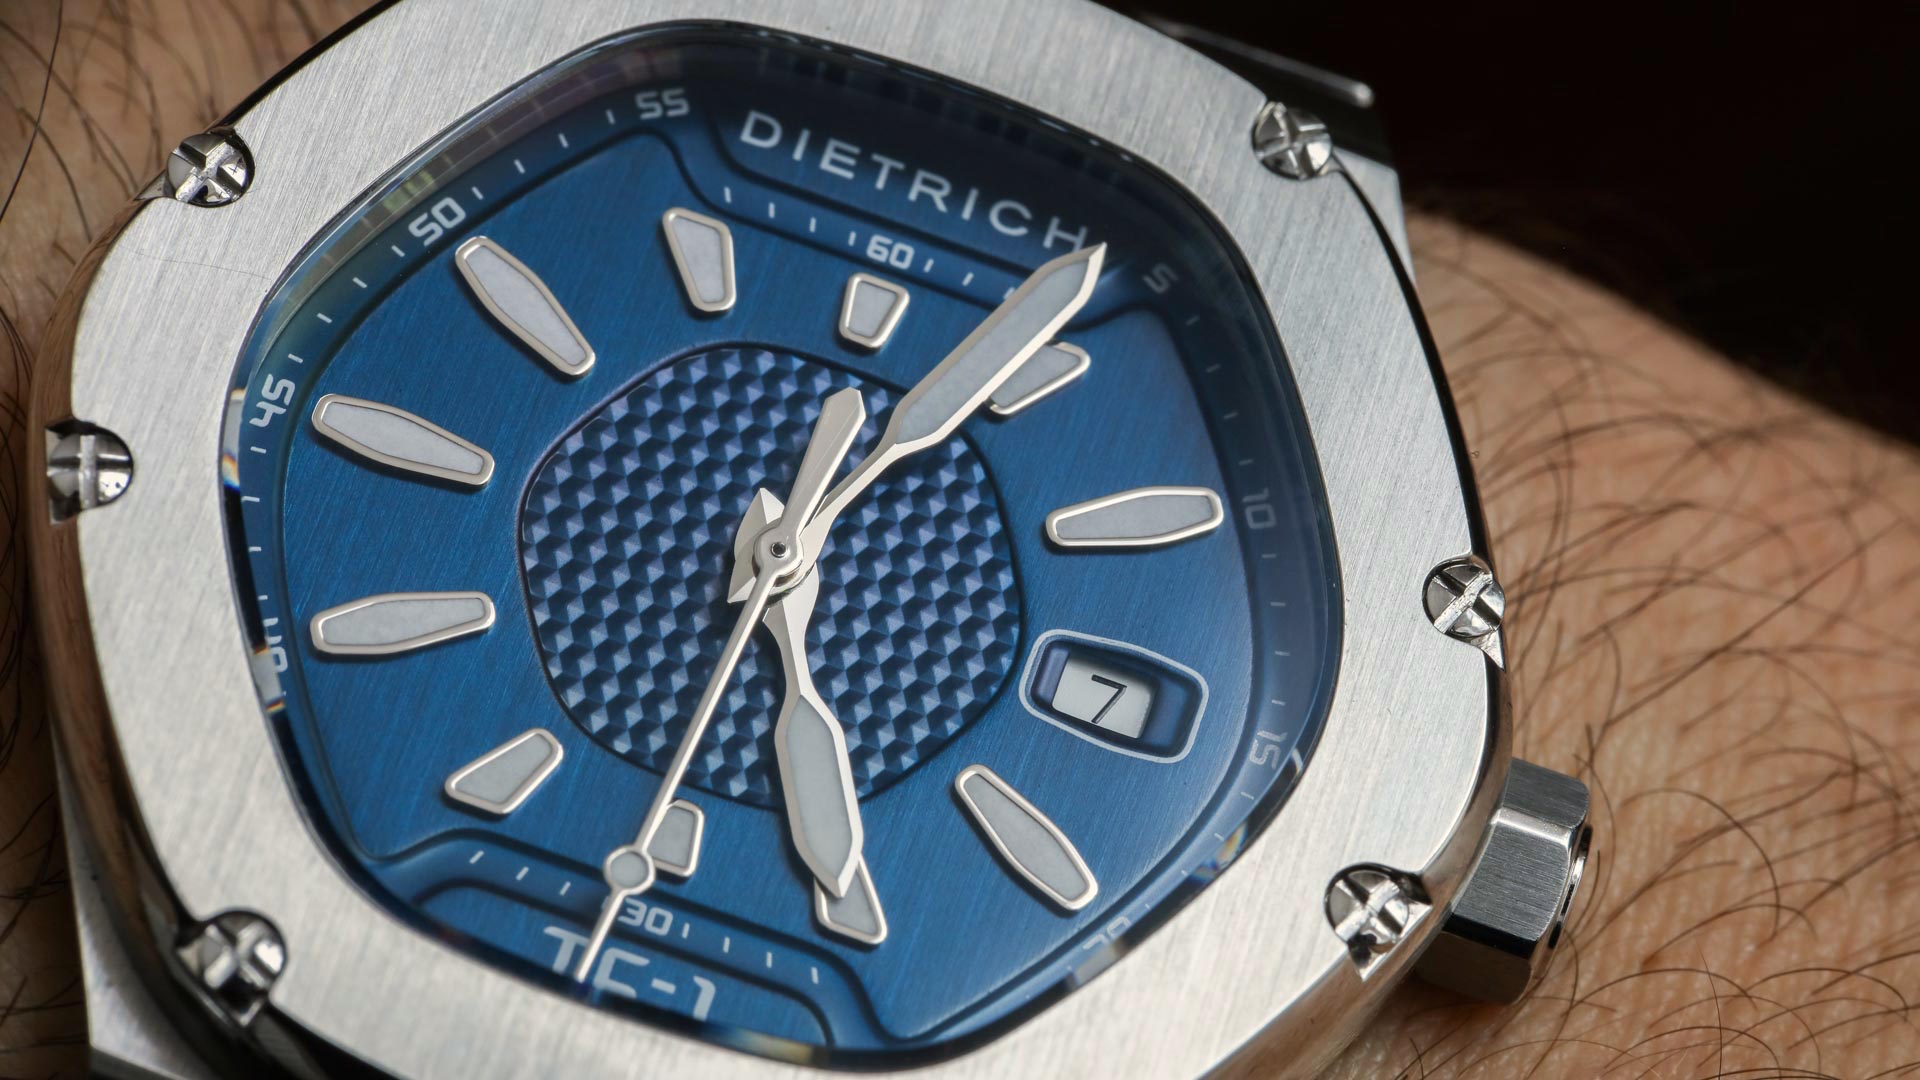 Dietrich Time Companion TC-1 Watch Review | aBlogtoWatch